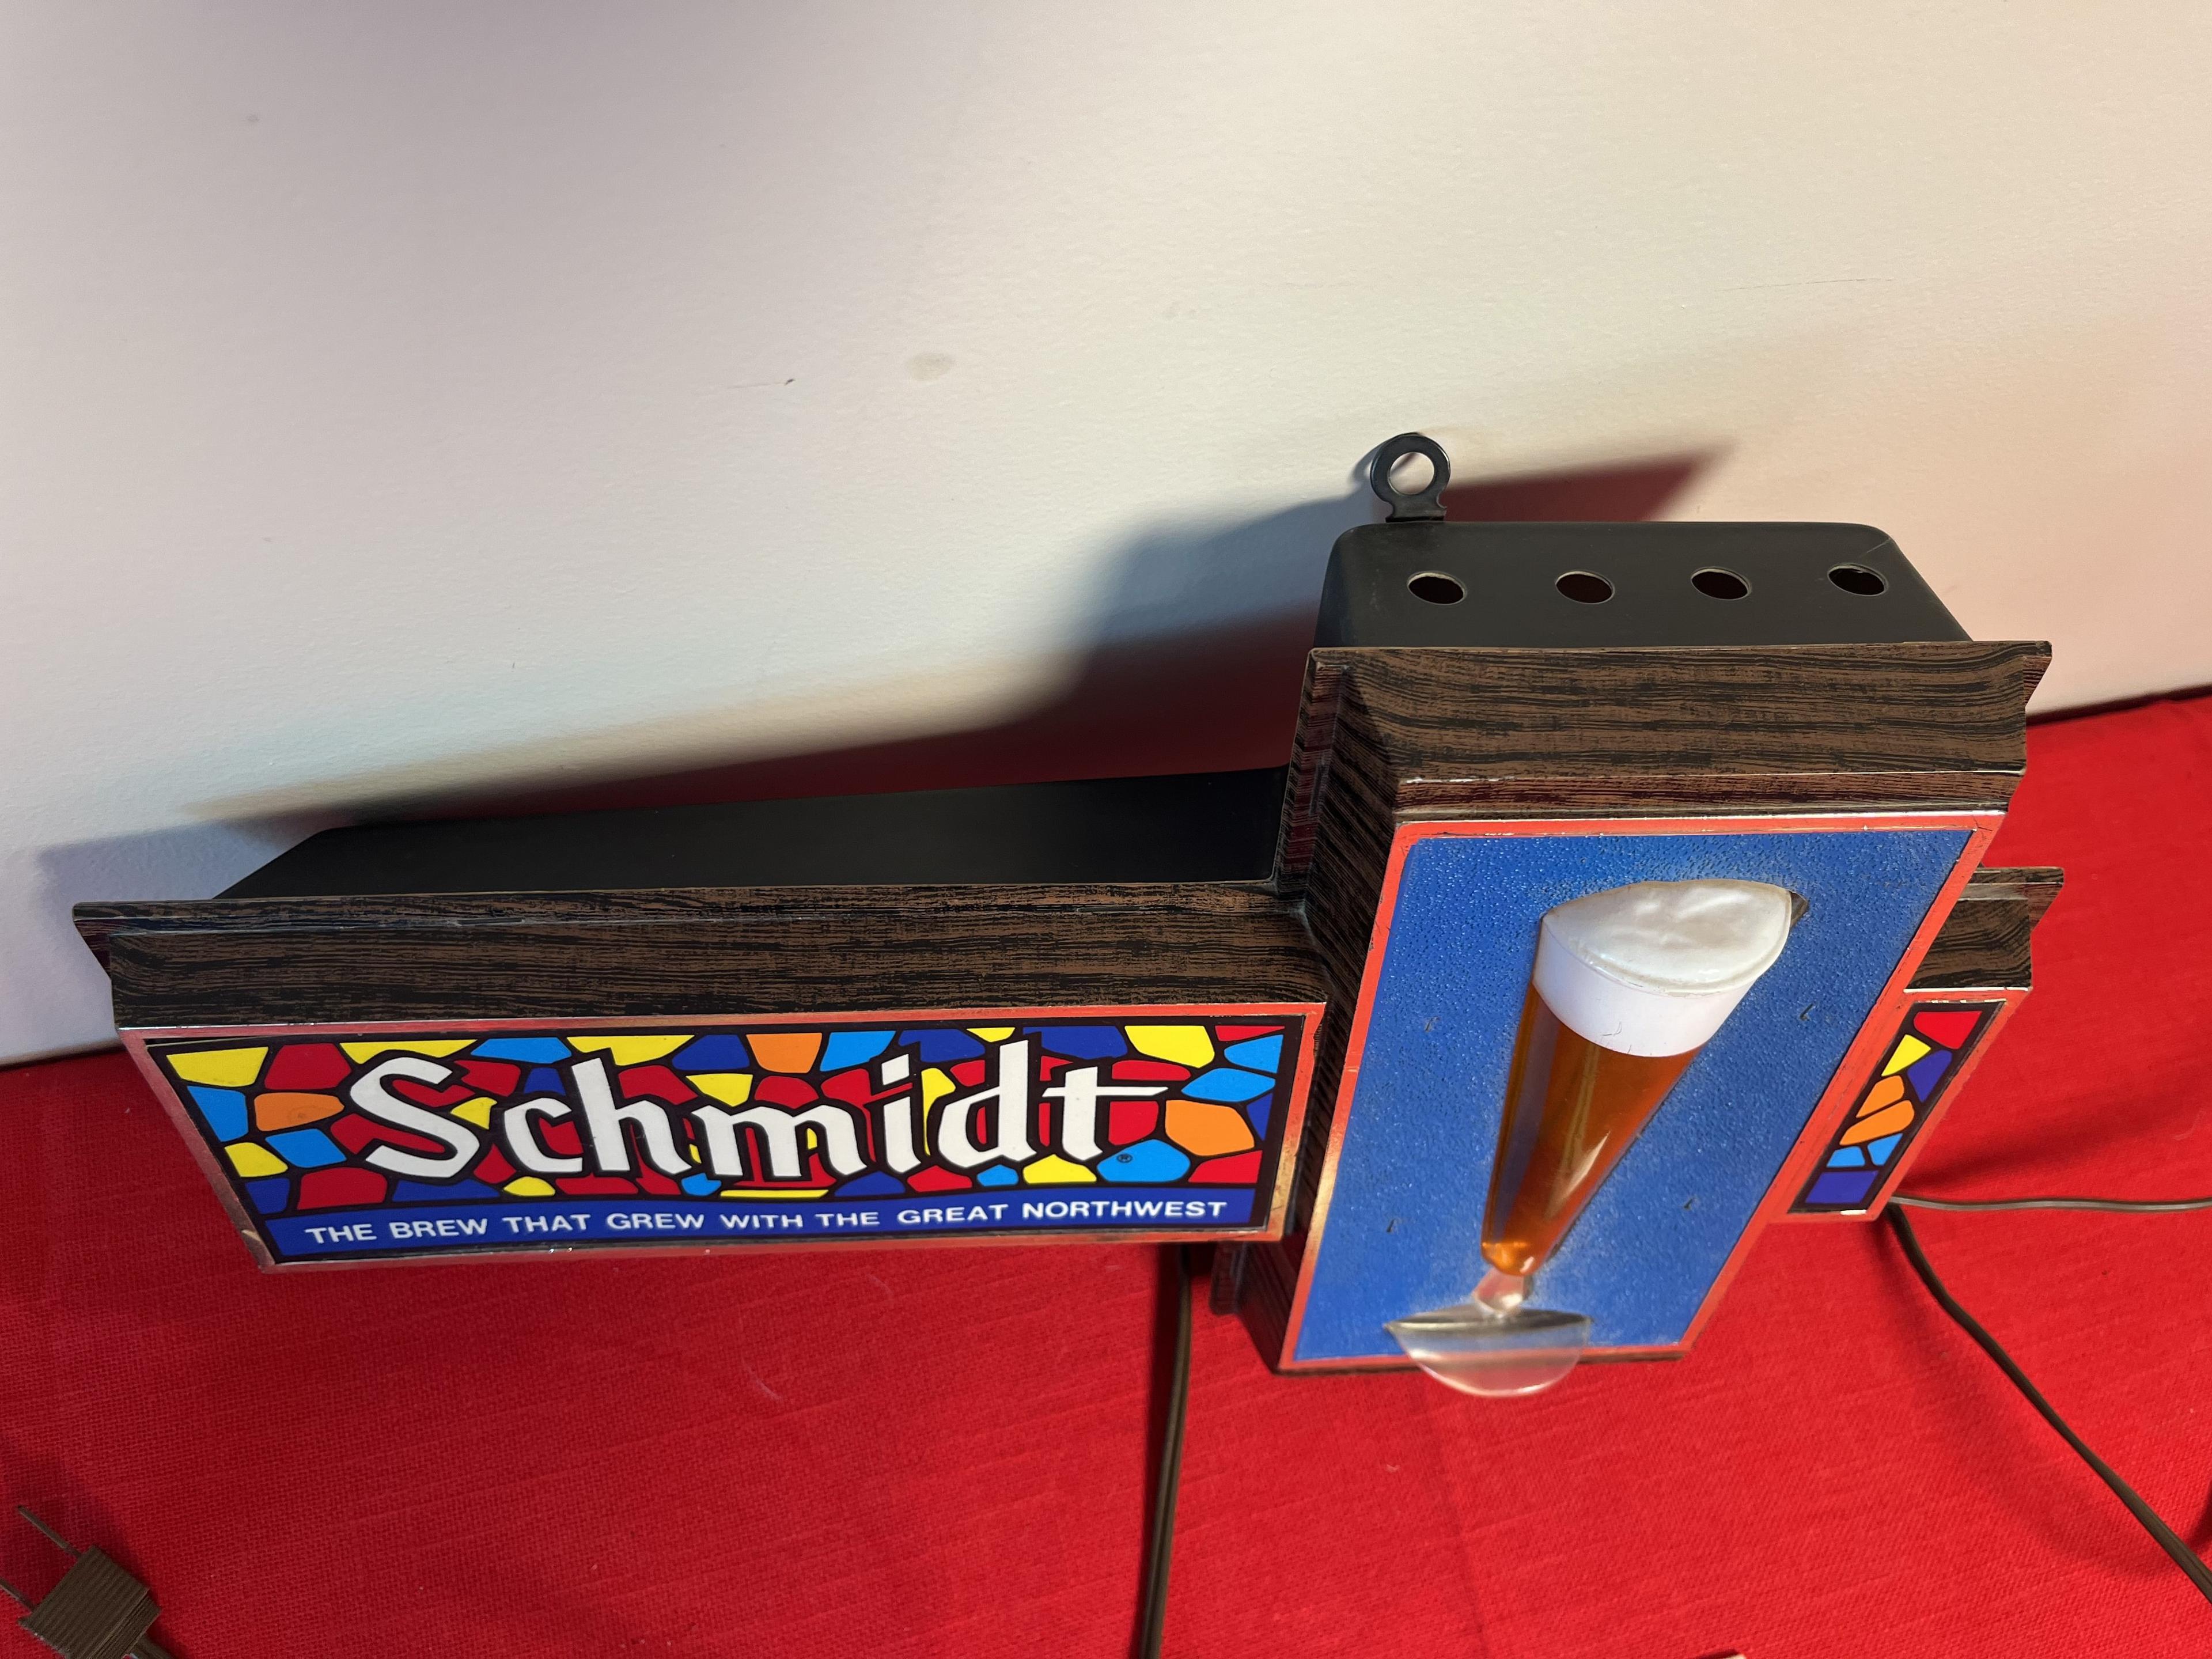 Schmidt Beer Bubbler Lighted Sign